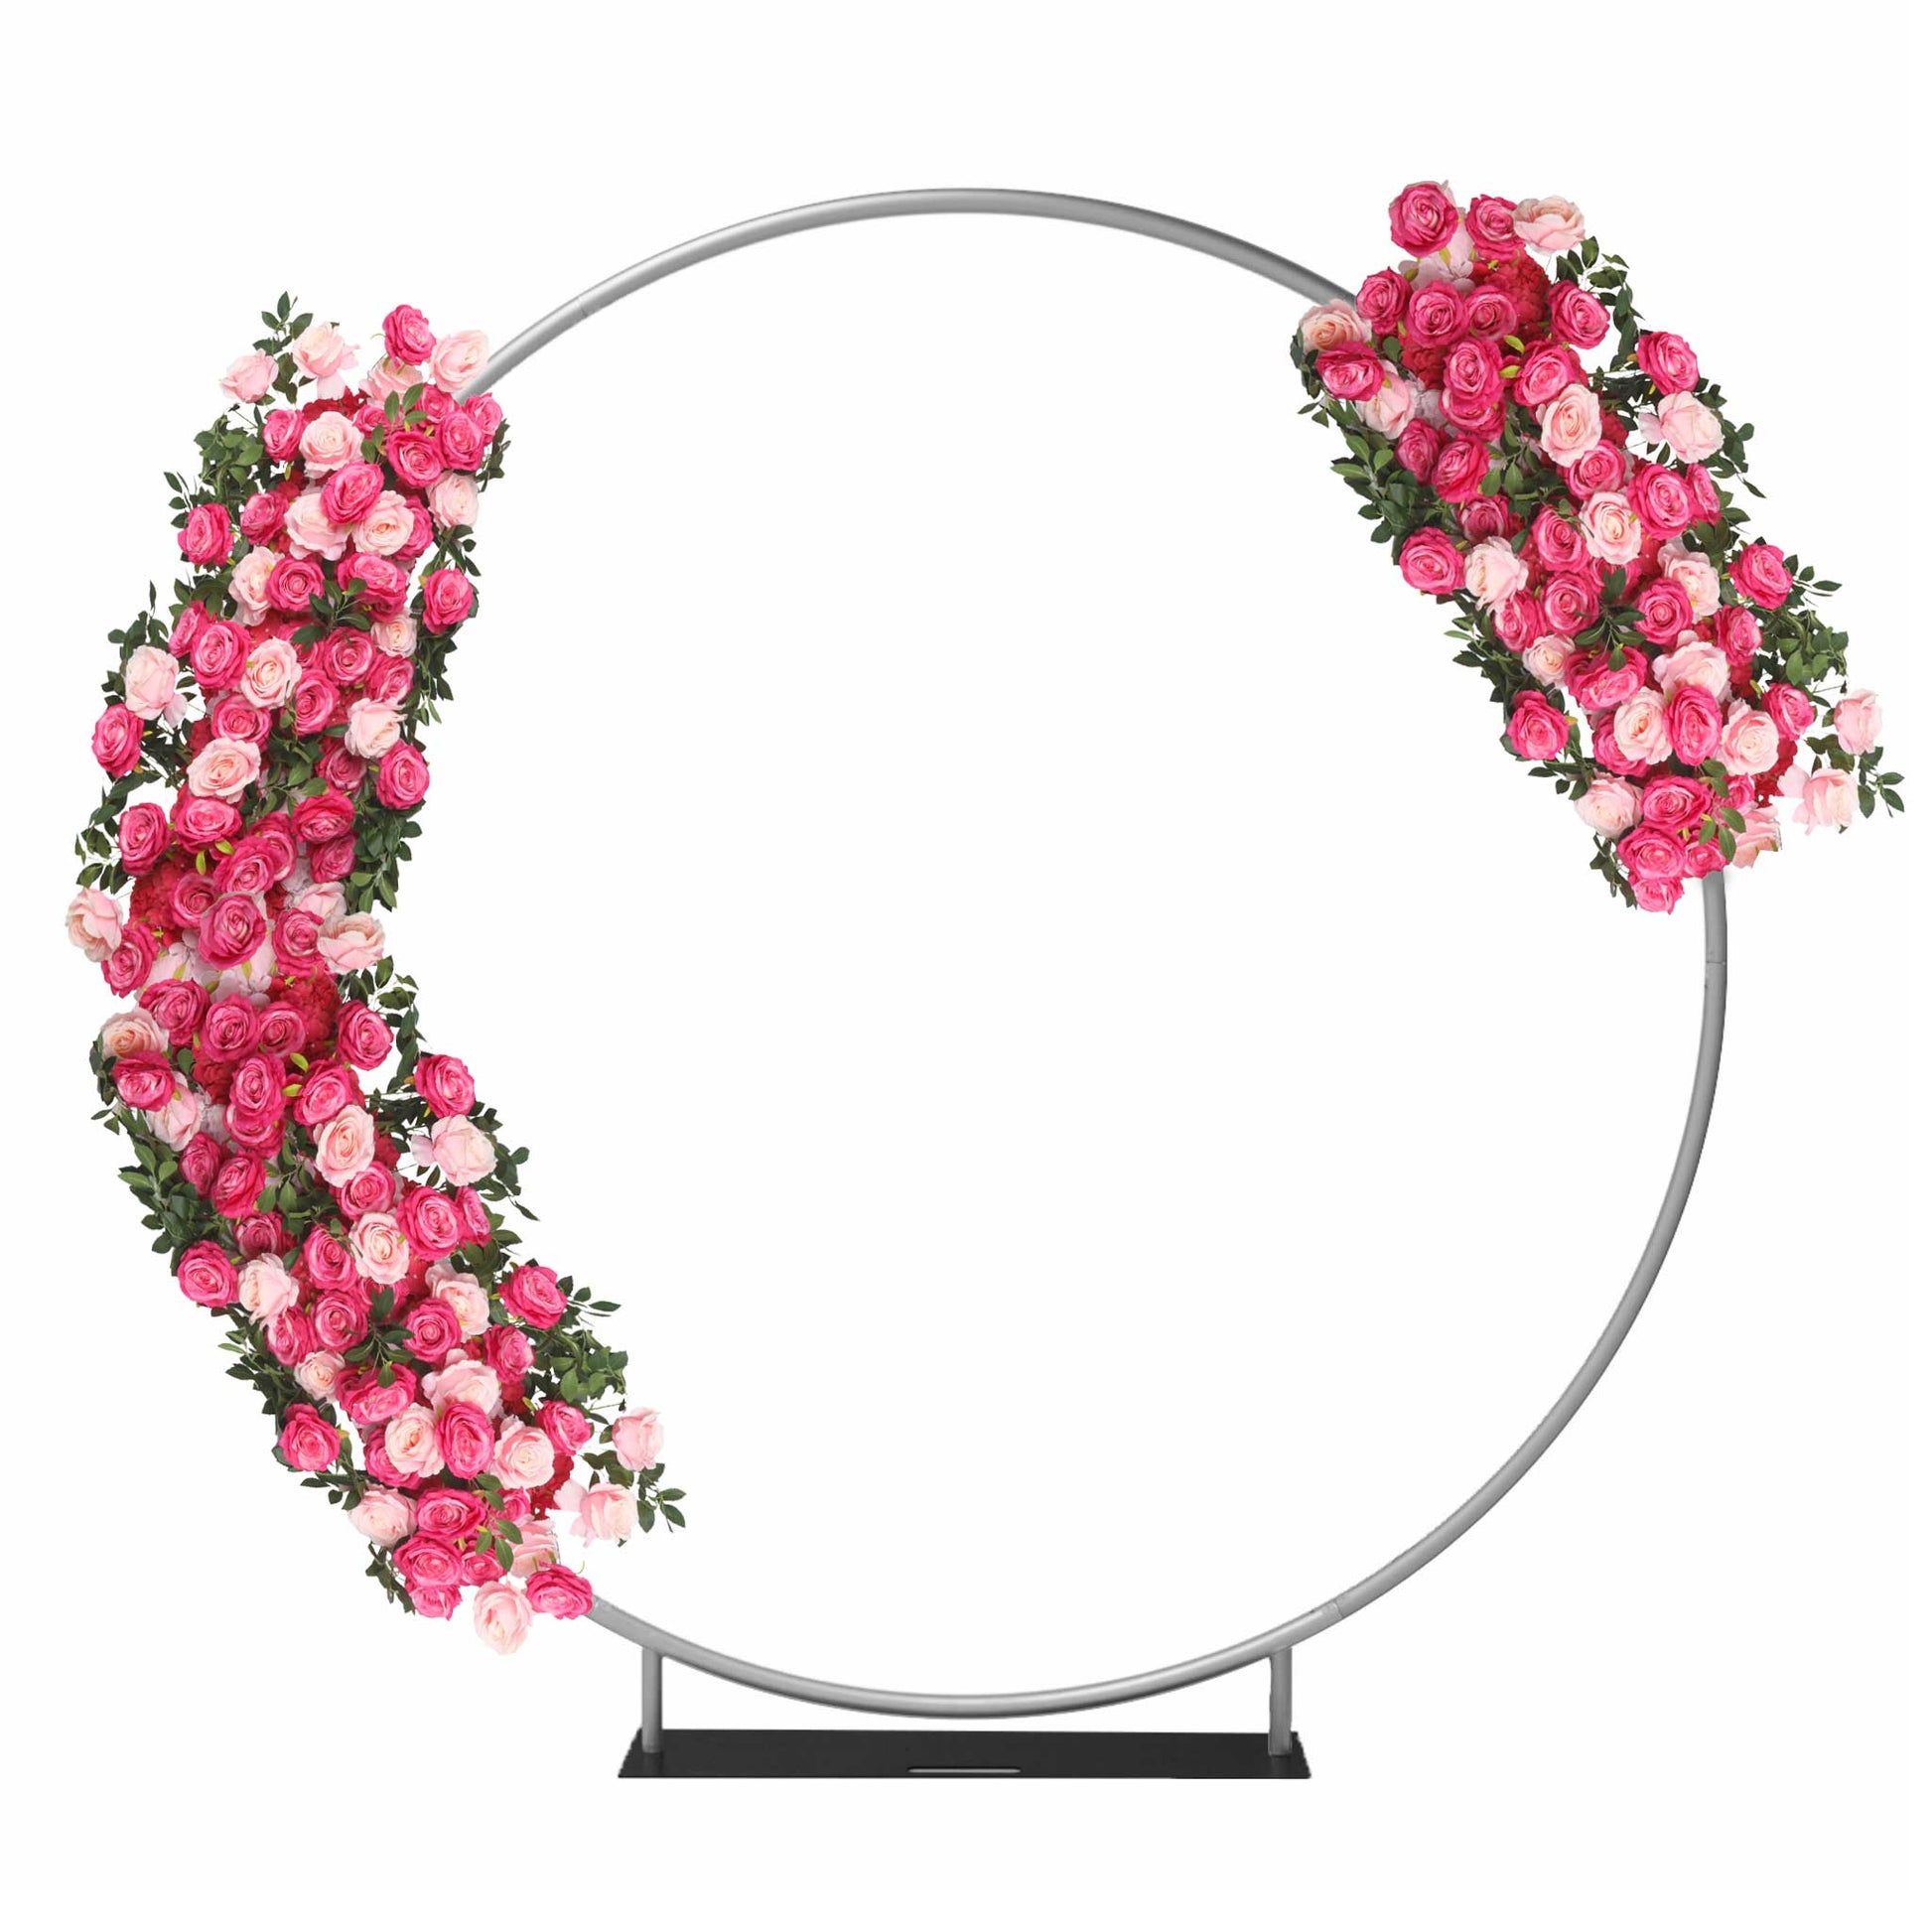 Premade Flower Backdrop Arch/Table Runner Decor - Fuchsia & Pink